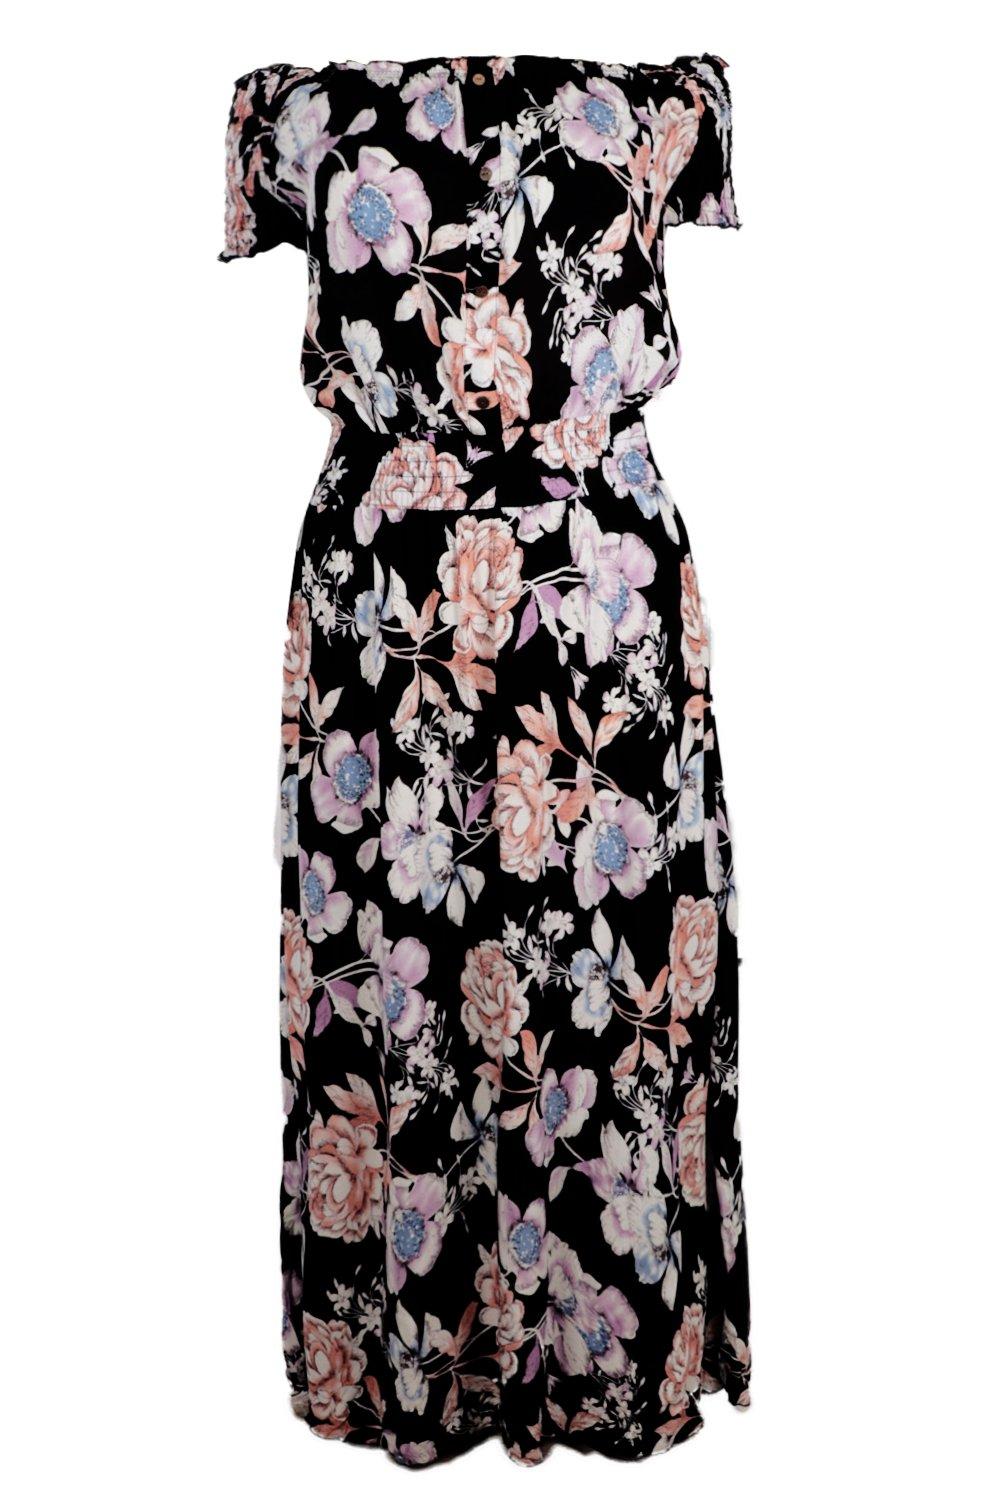 Boohoo Womens Plus Helen Floral Off The Shoulder Maxi Dress | eBay